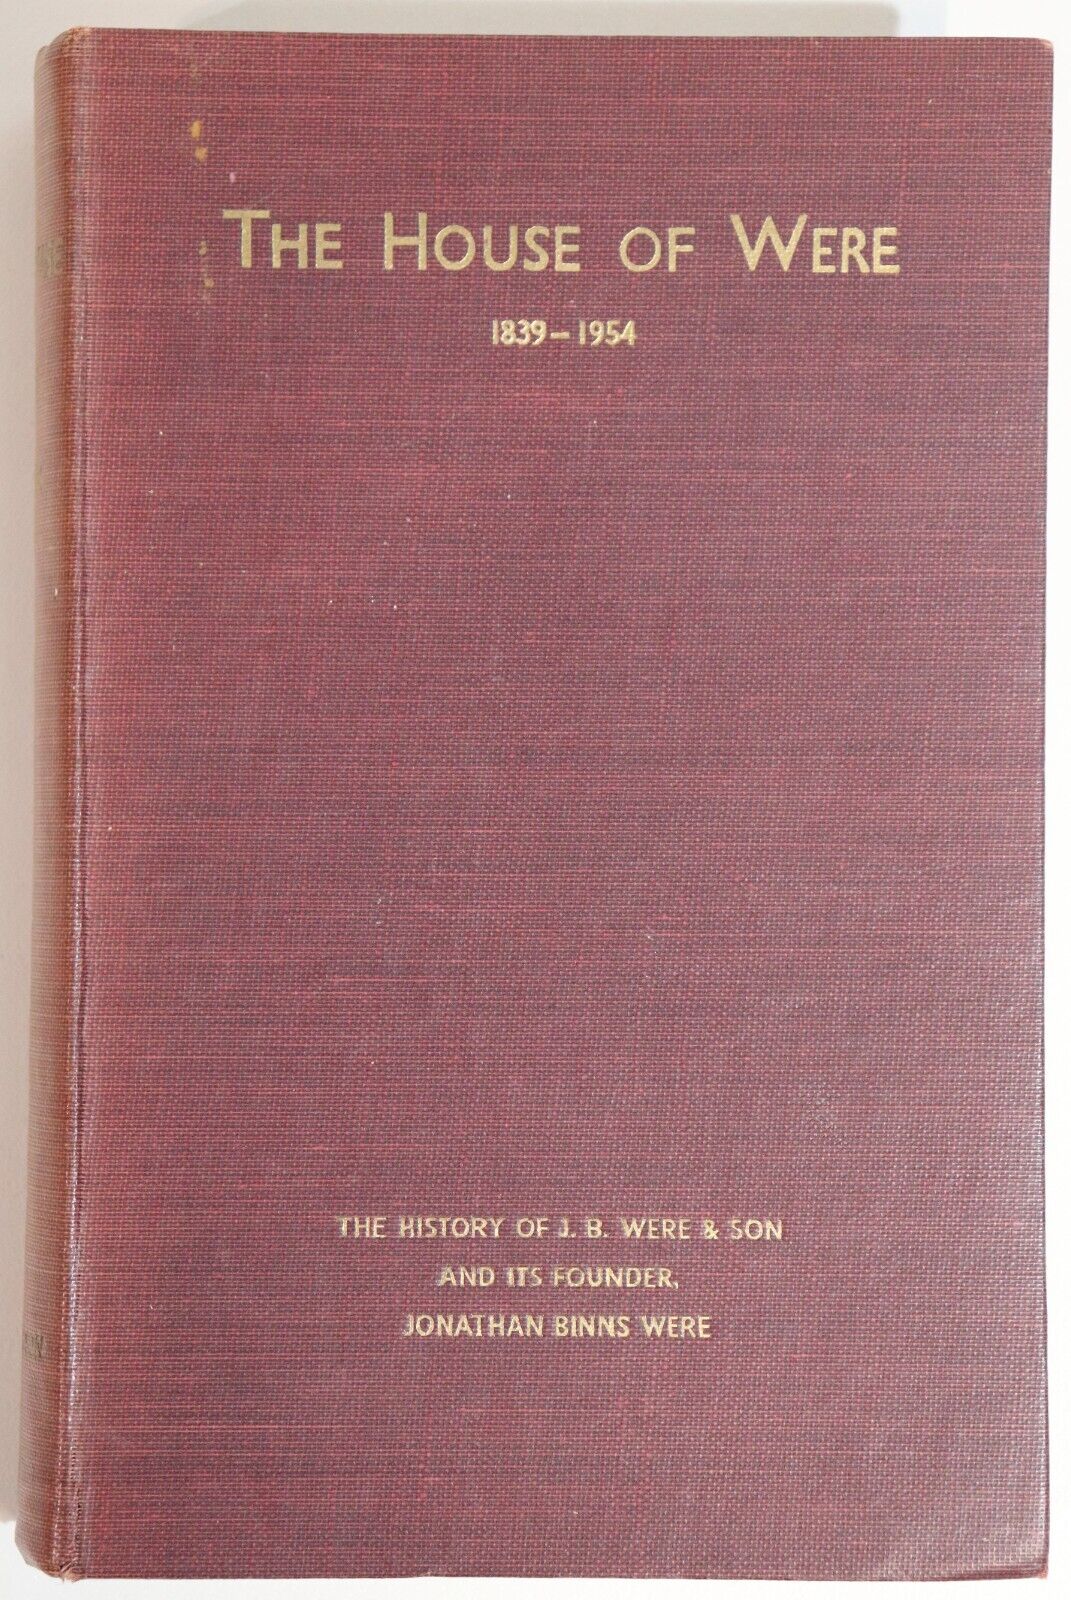 The History Of J.B. Were & Son - 1954 - Australian Financial History Book